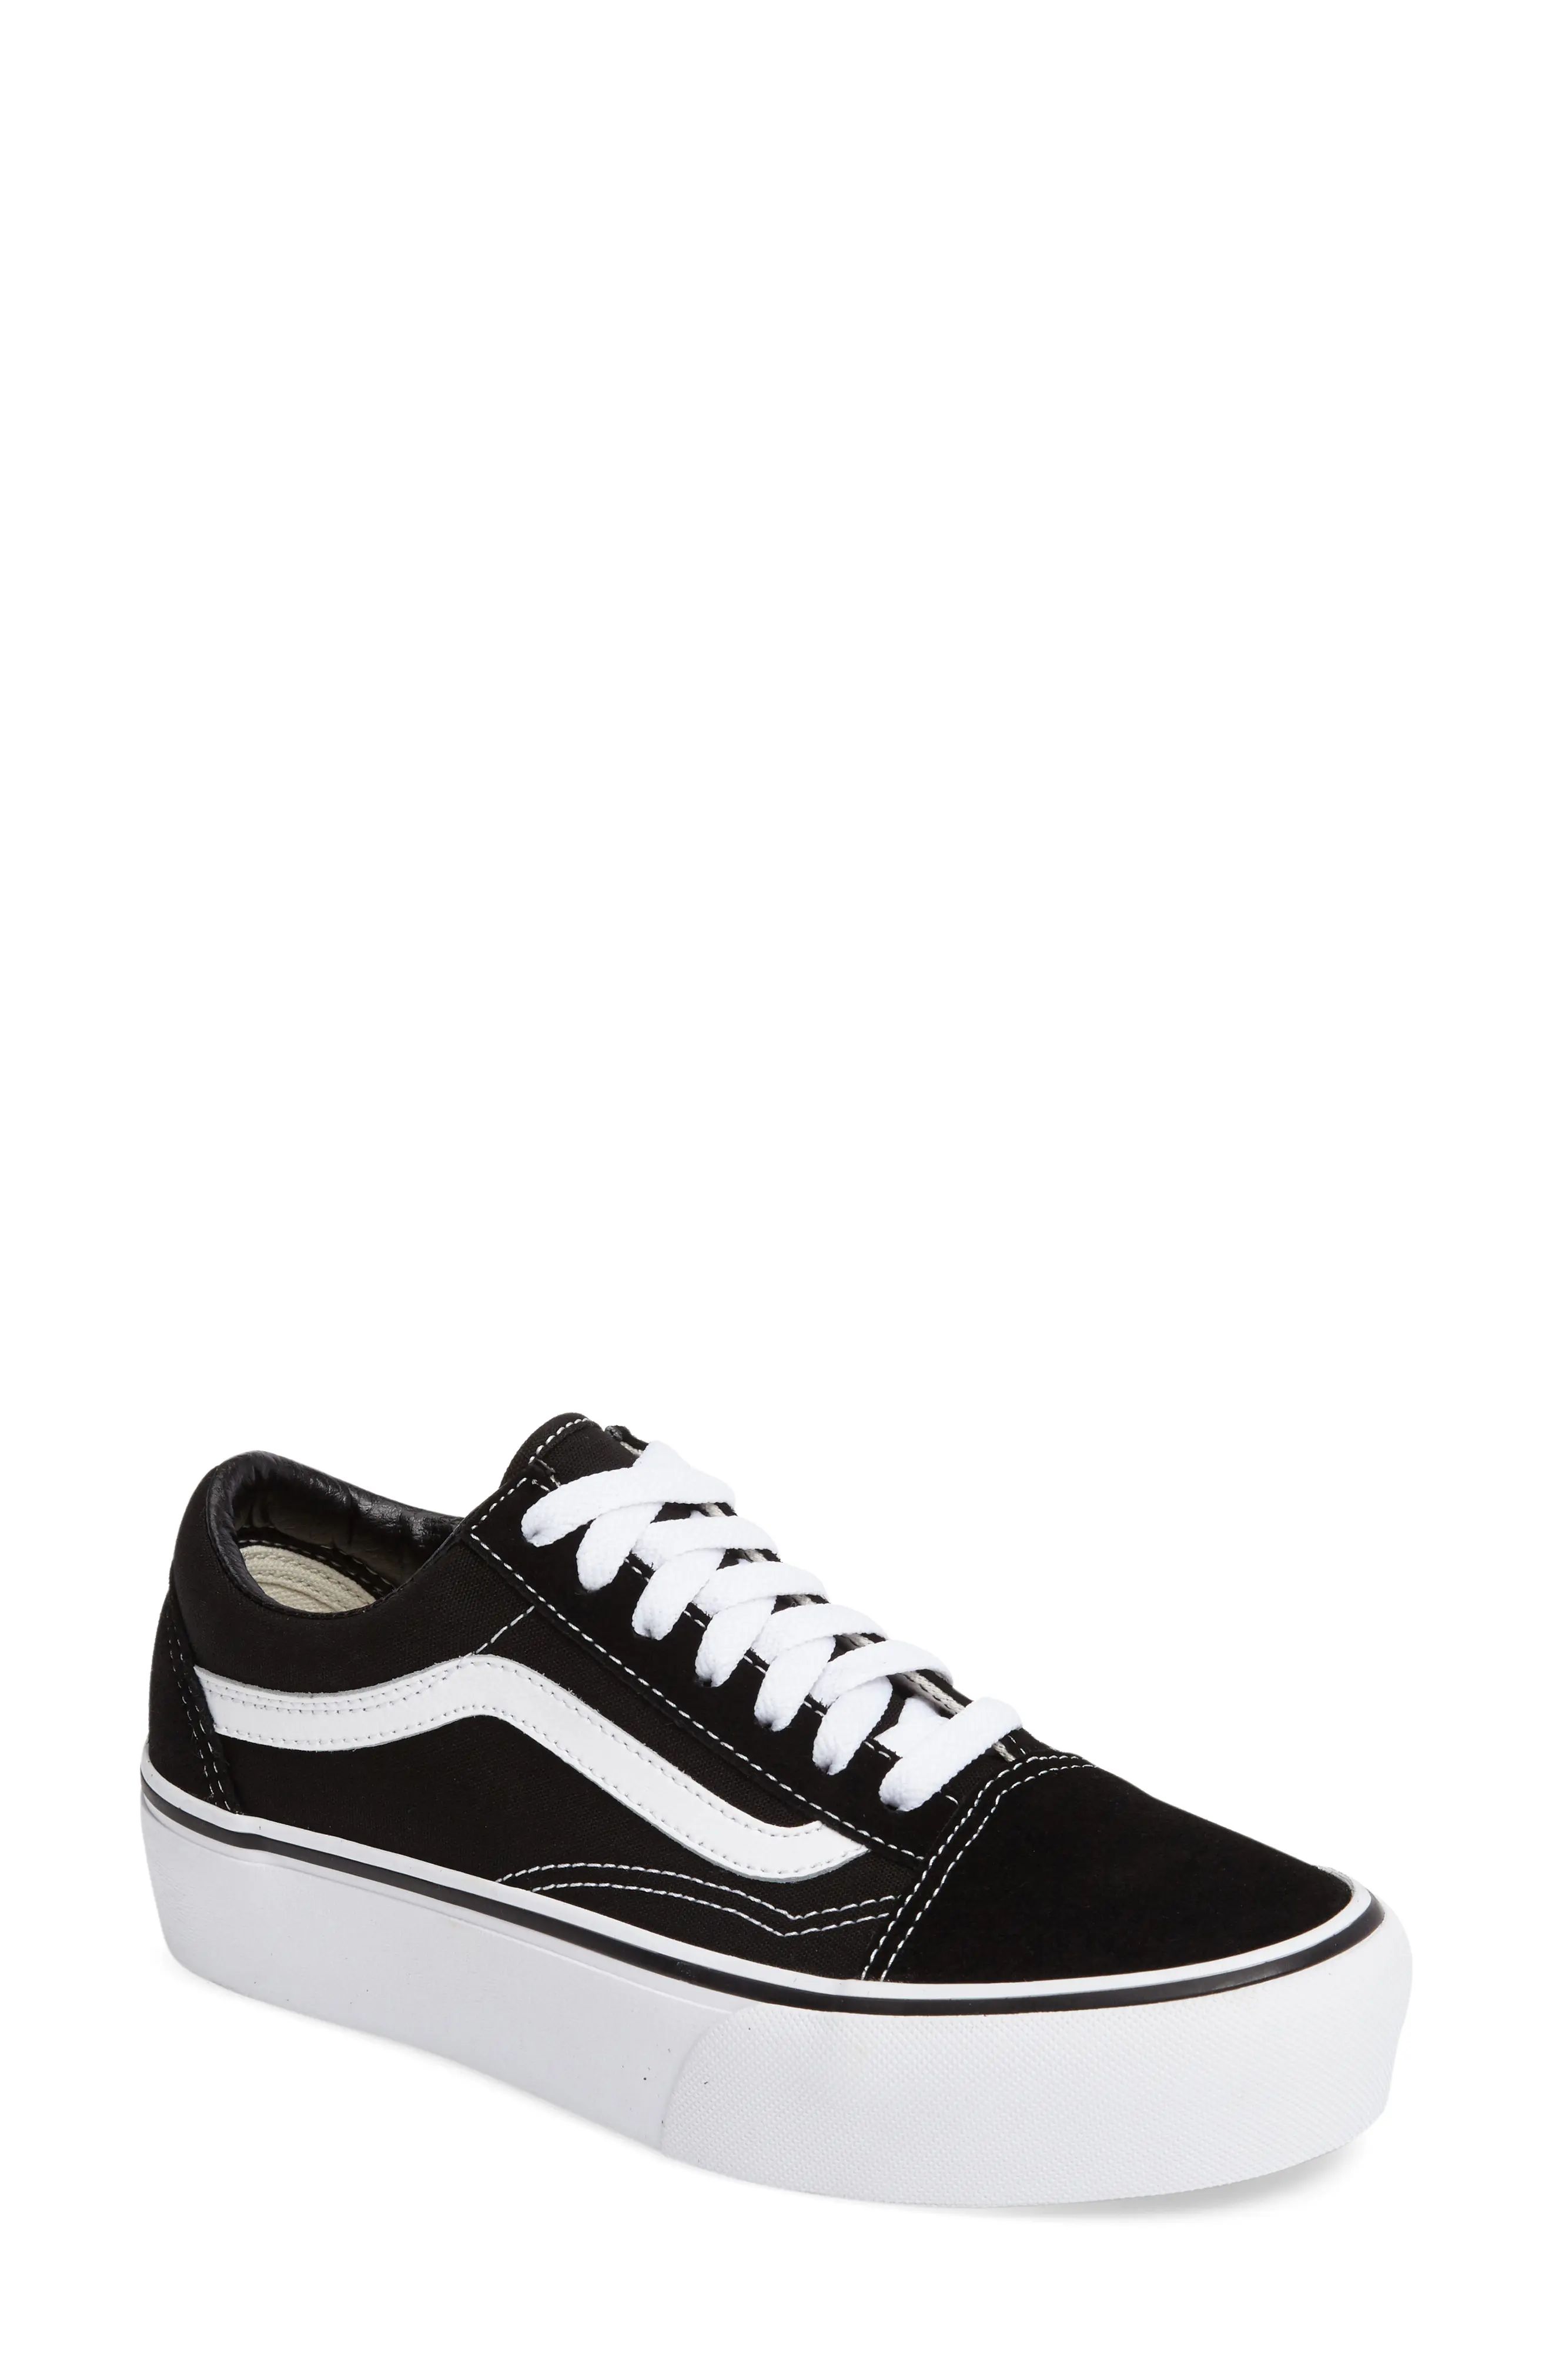 Women's Vans Old Skool Platform Sneaker, Size 6 M - Black | Nordstrom